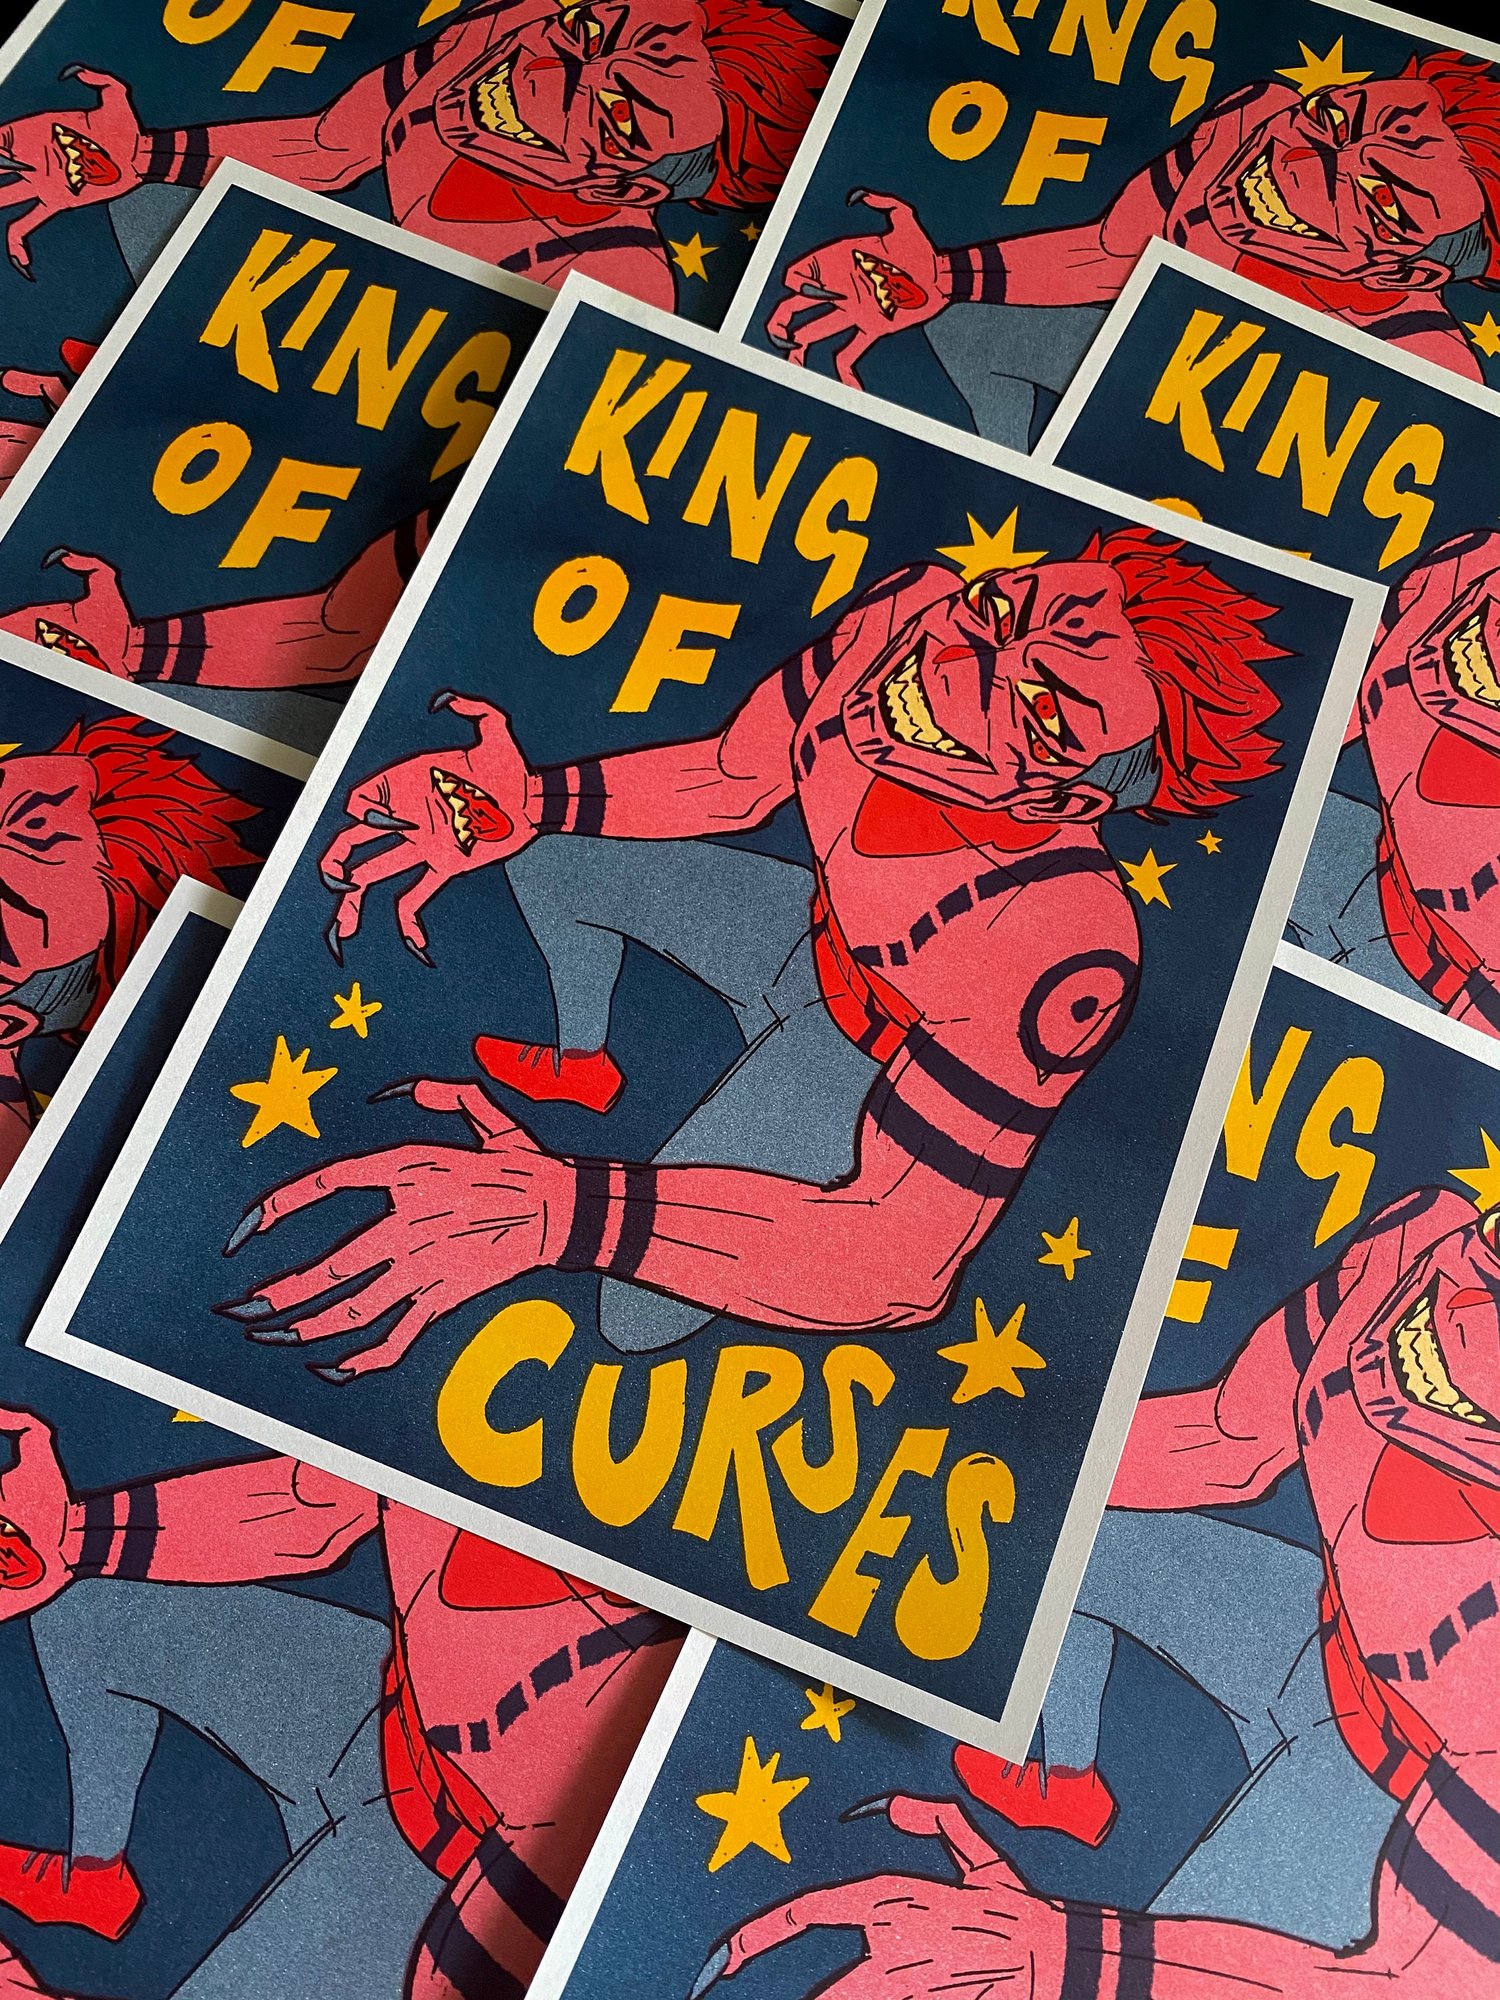 King of Curses Riso Print